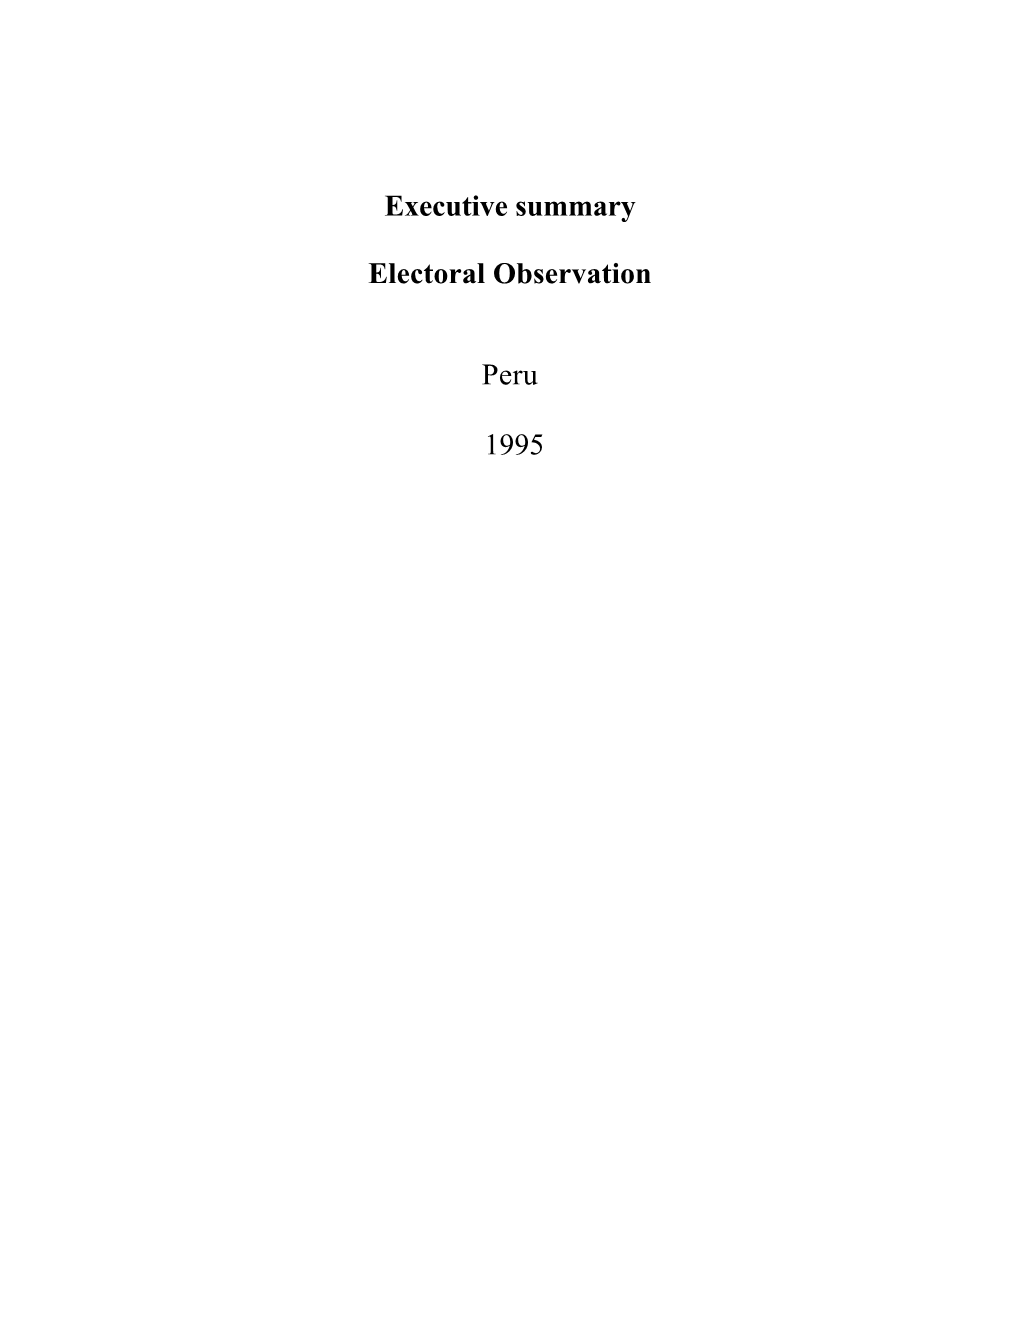 Executive Summary Electoral Observation Peru 1995